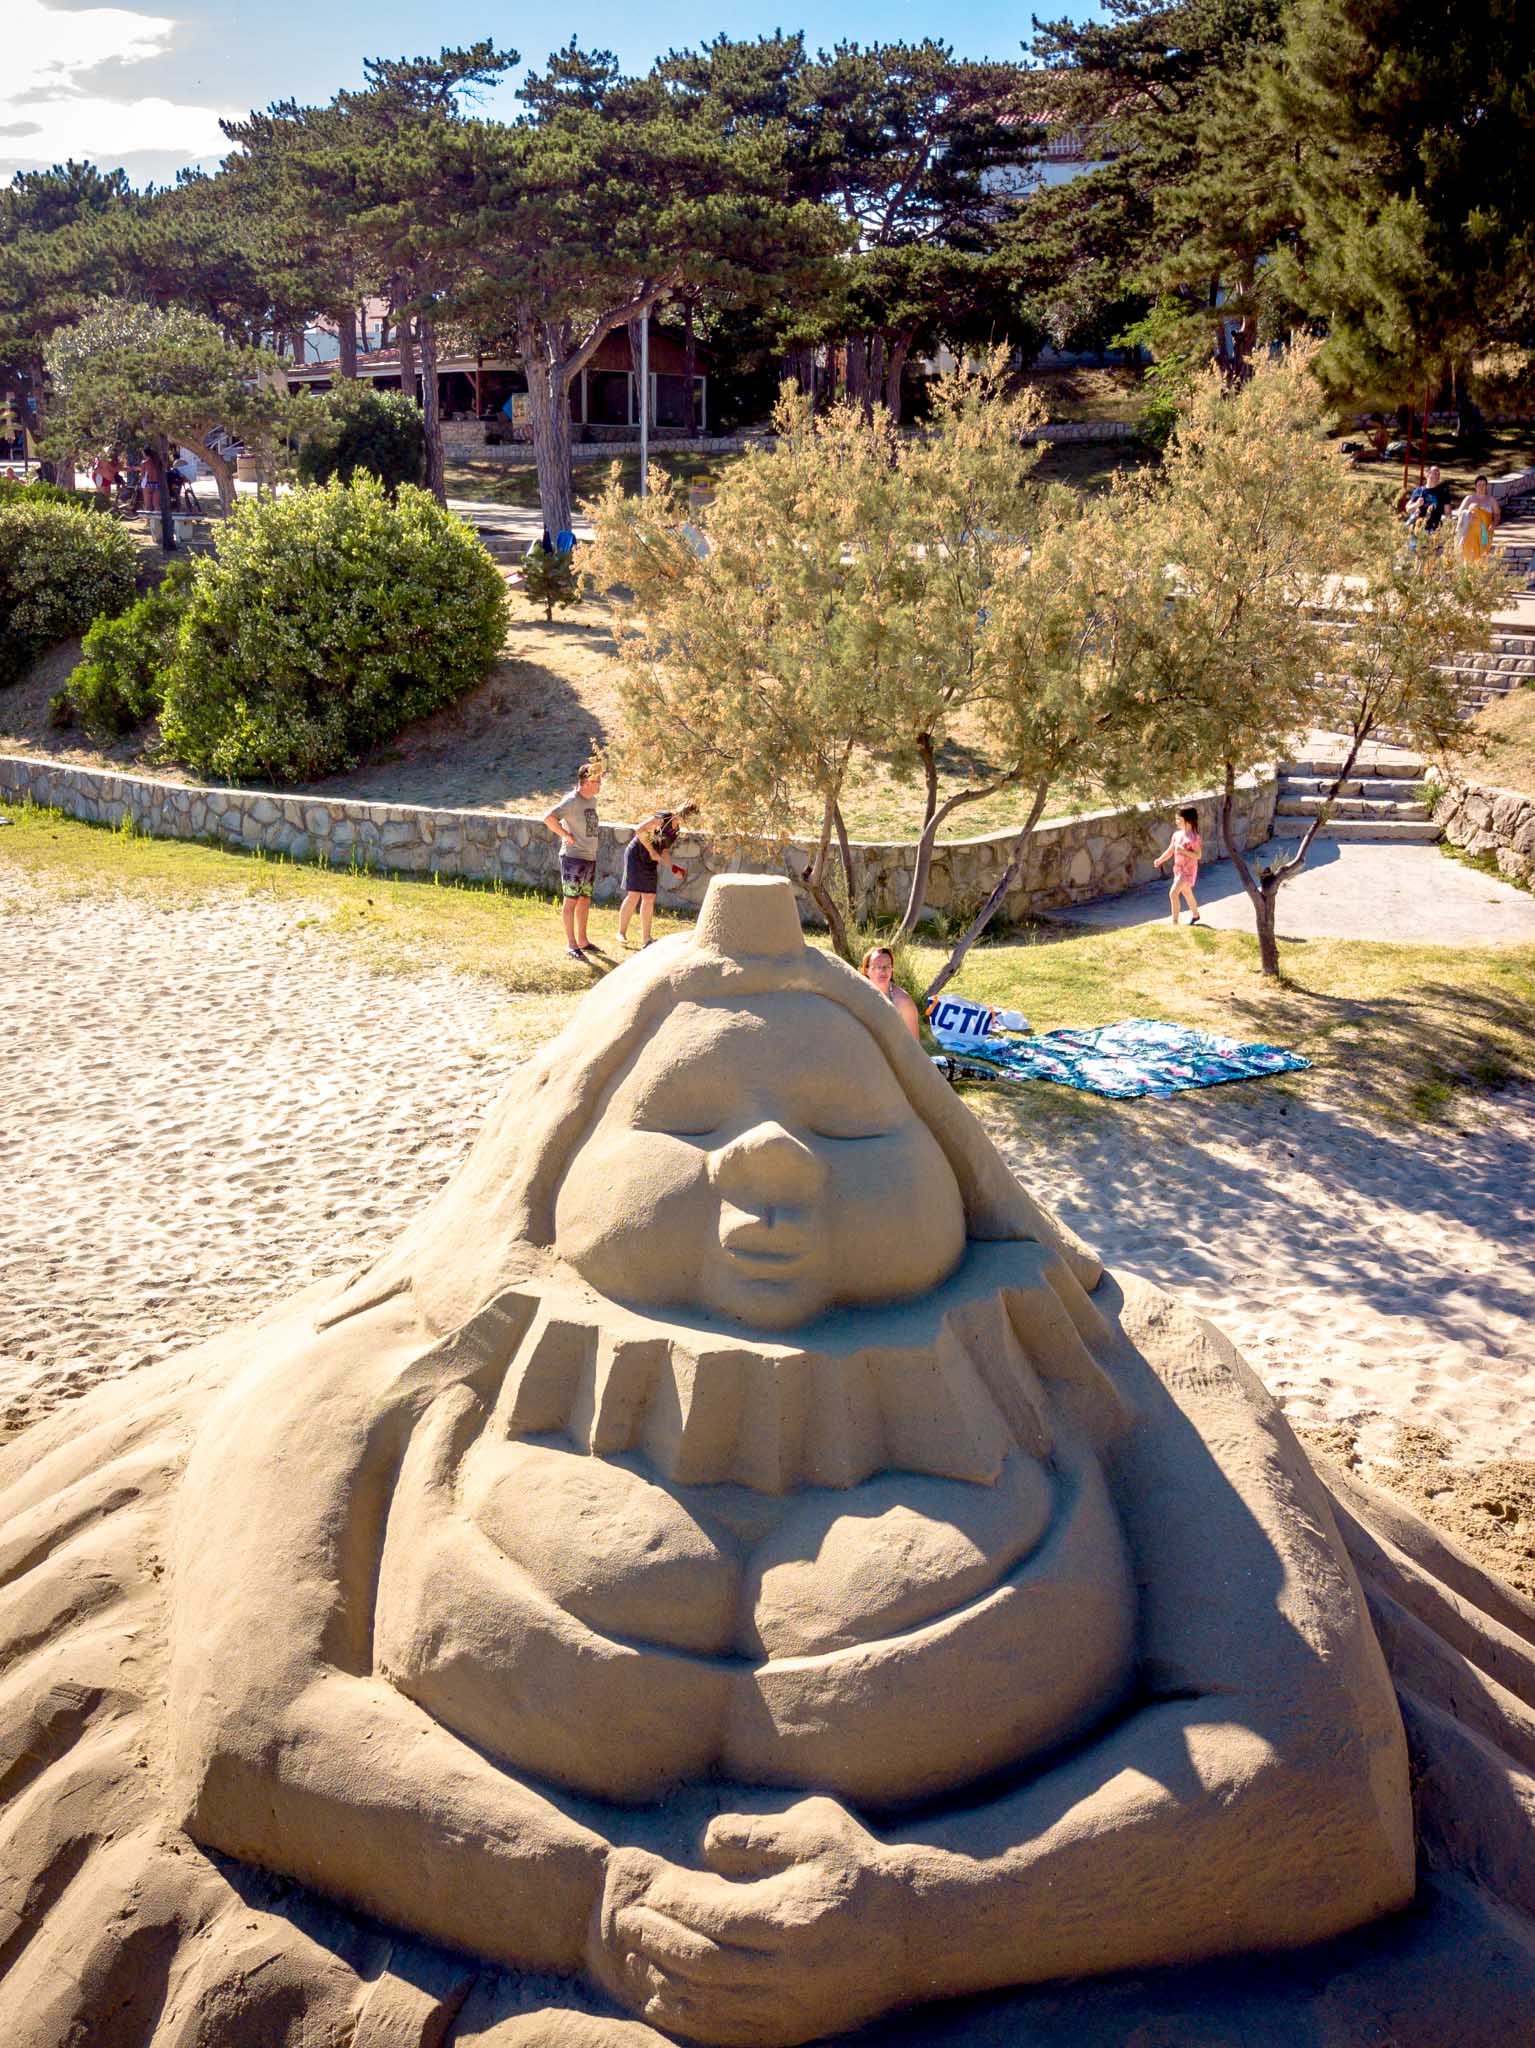 Amazing sand sculptures on Paradise beach in Lopar